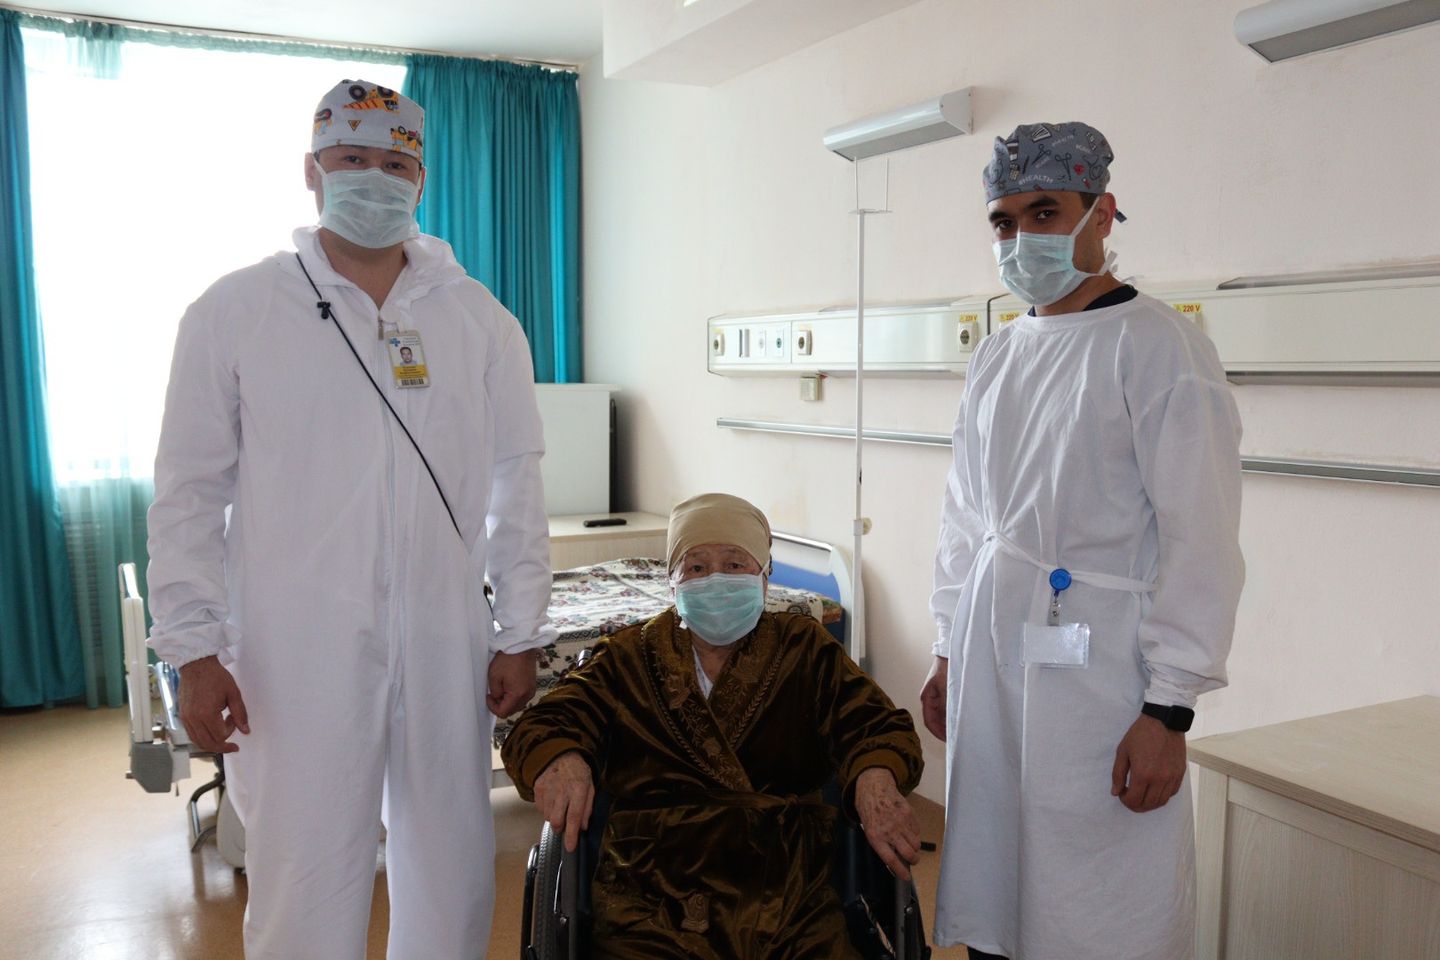 Травматологи ГКБ №4 успешно прооперировали 95-летнюю пациентку с переломом бедра